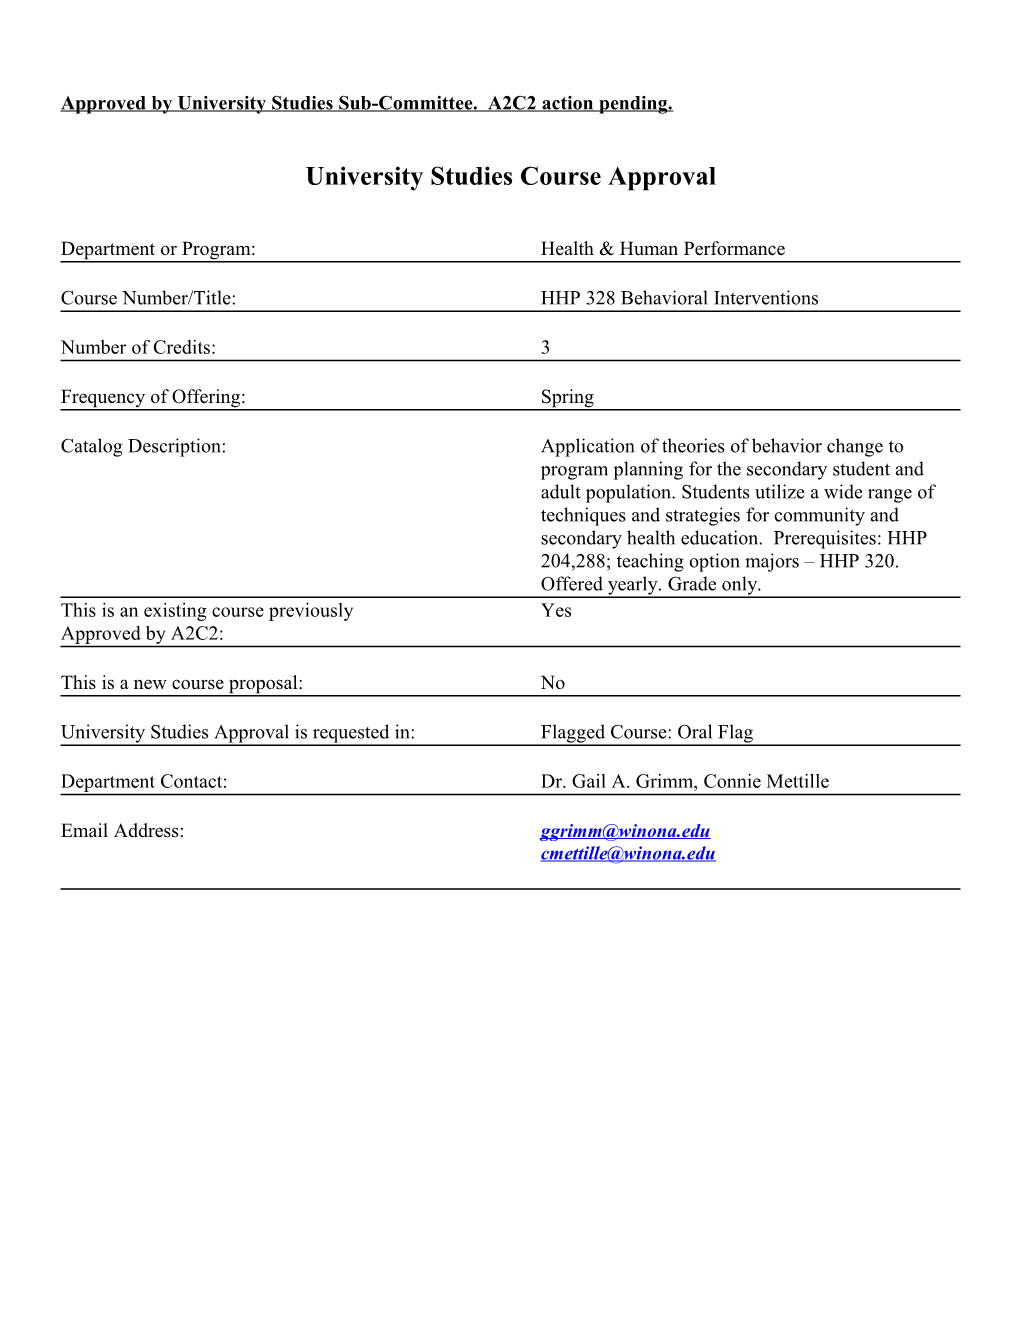 University Studies Course Approval s1